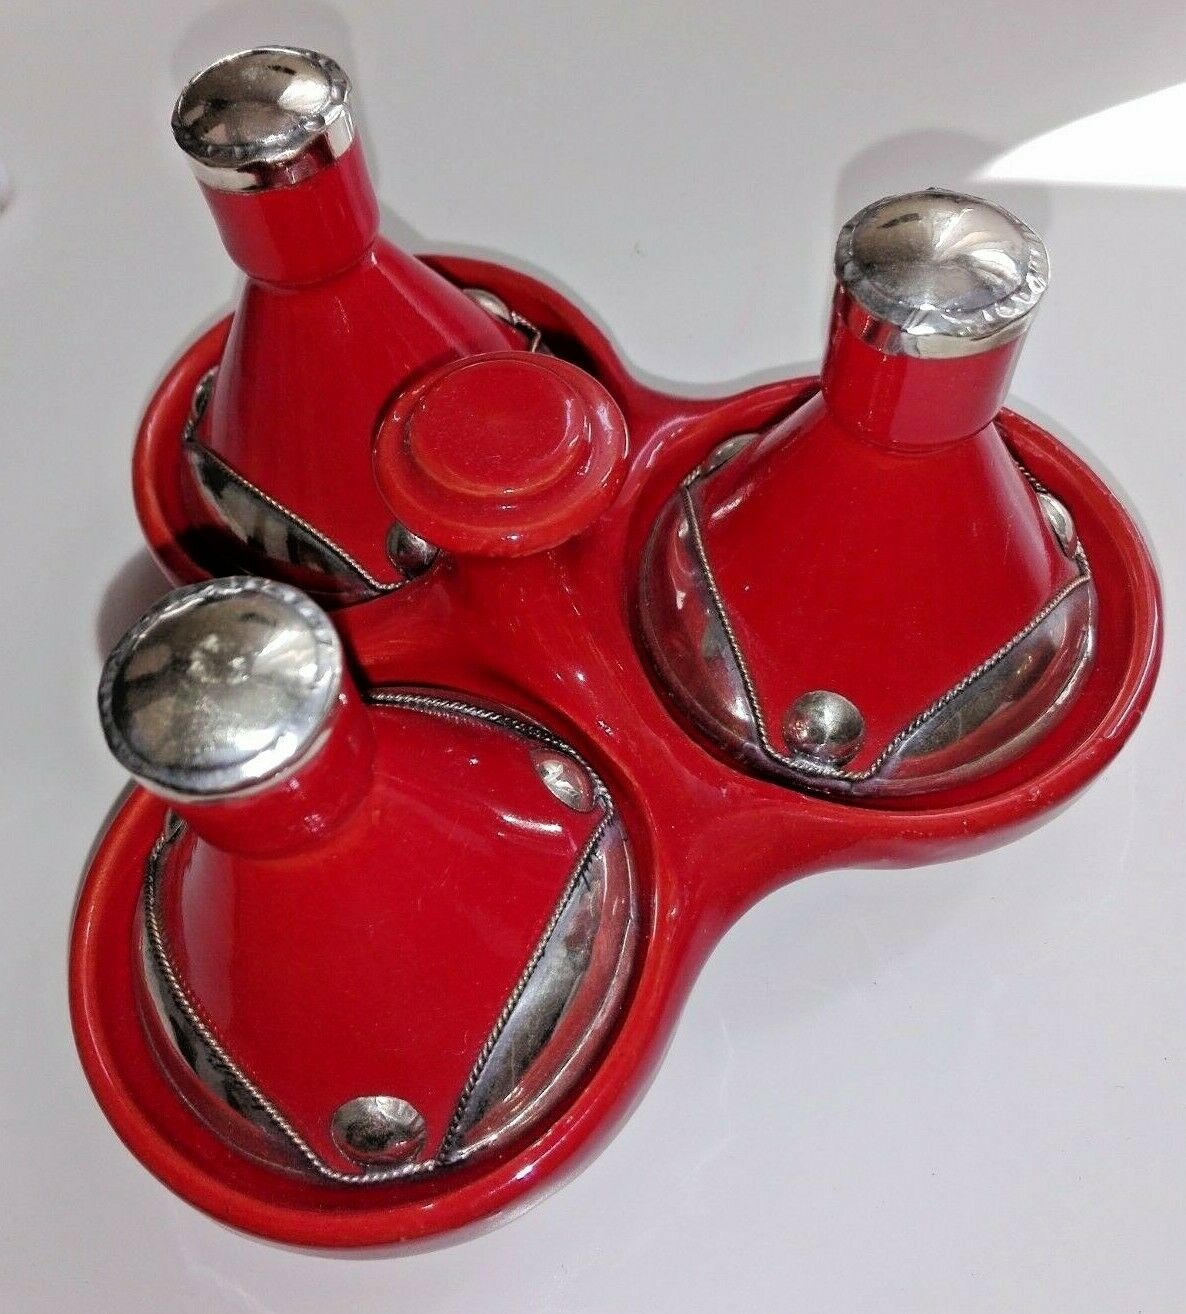 3 Mini Tajine Tagine Moroccan Red Handmade Metalwork Spice Holder /multifunction